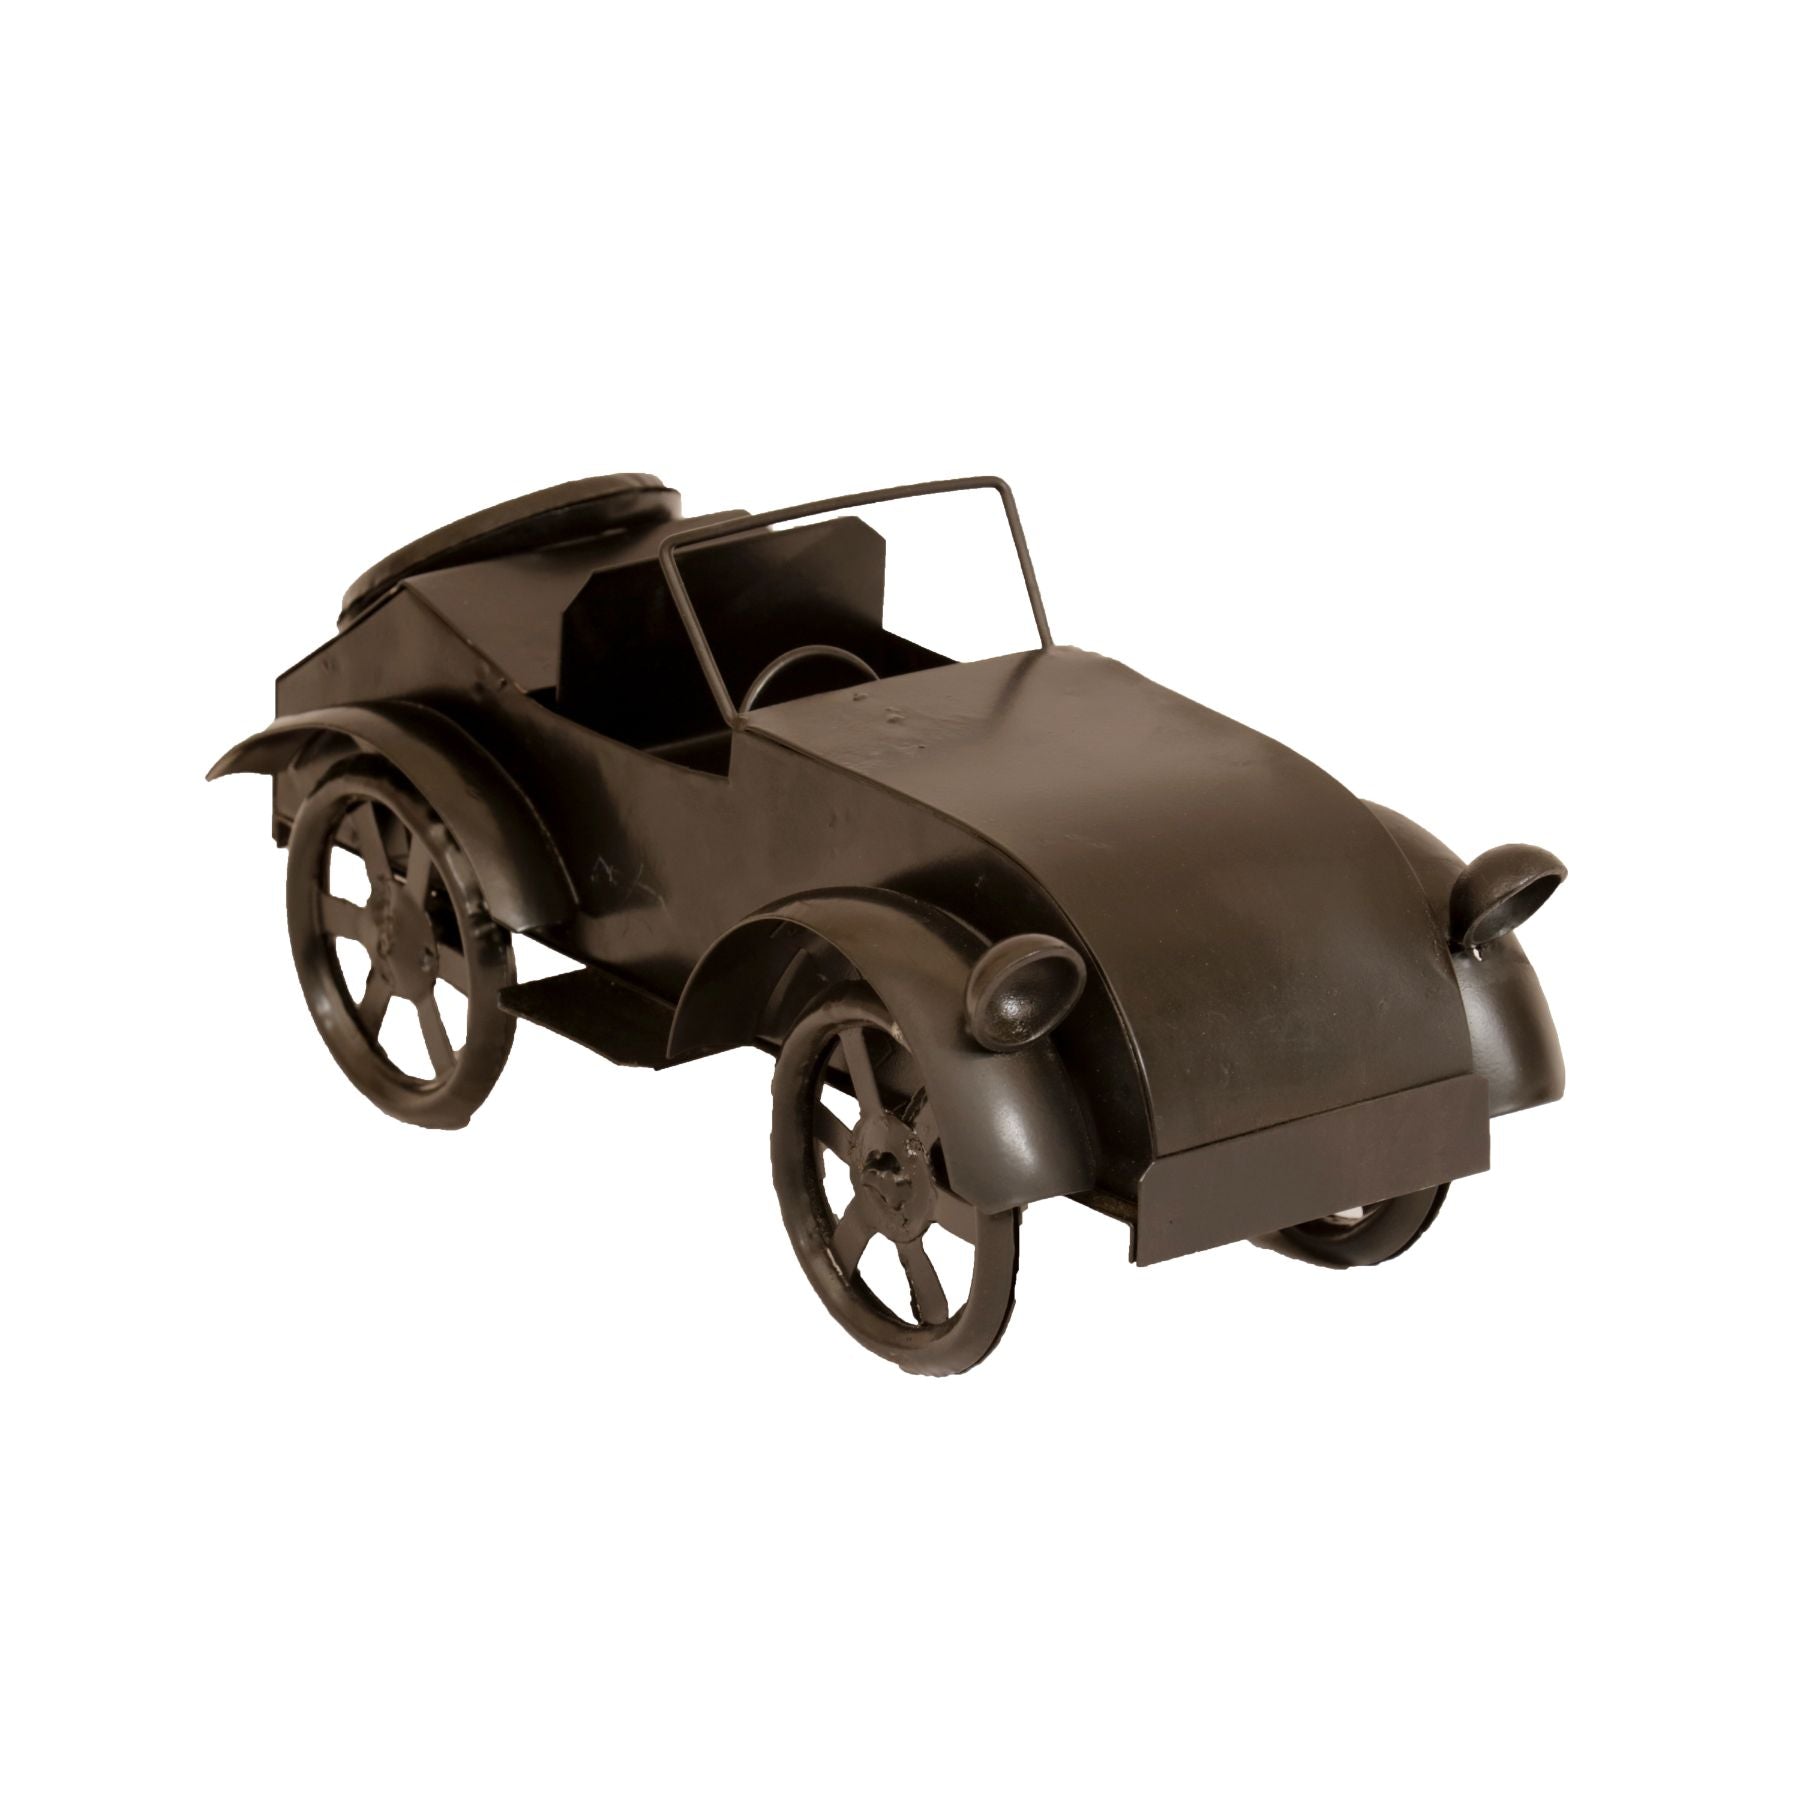 Vintage Black Metal Car Vehicle figurine